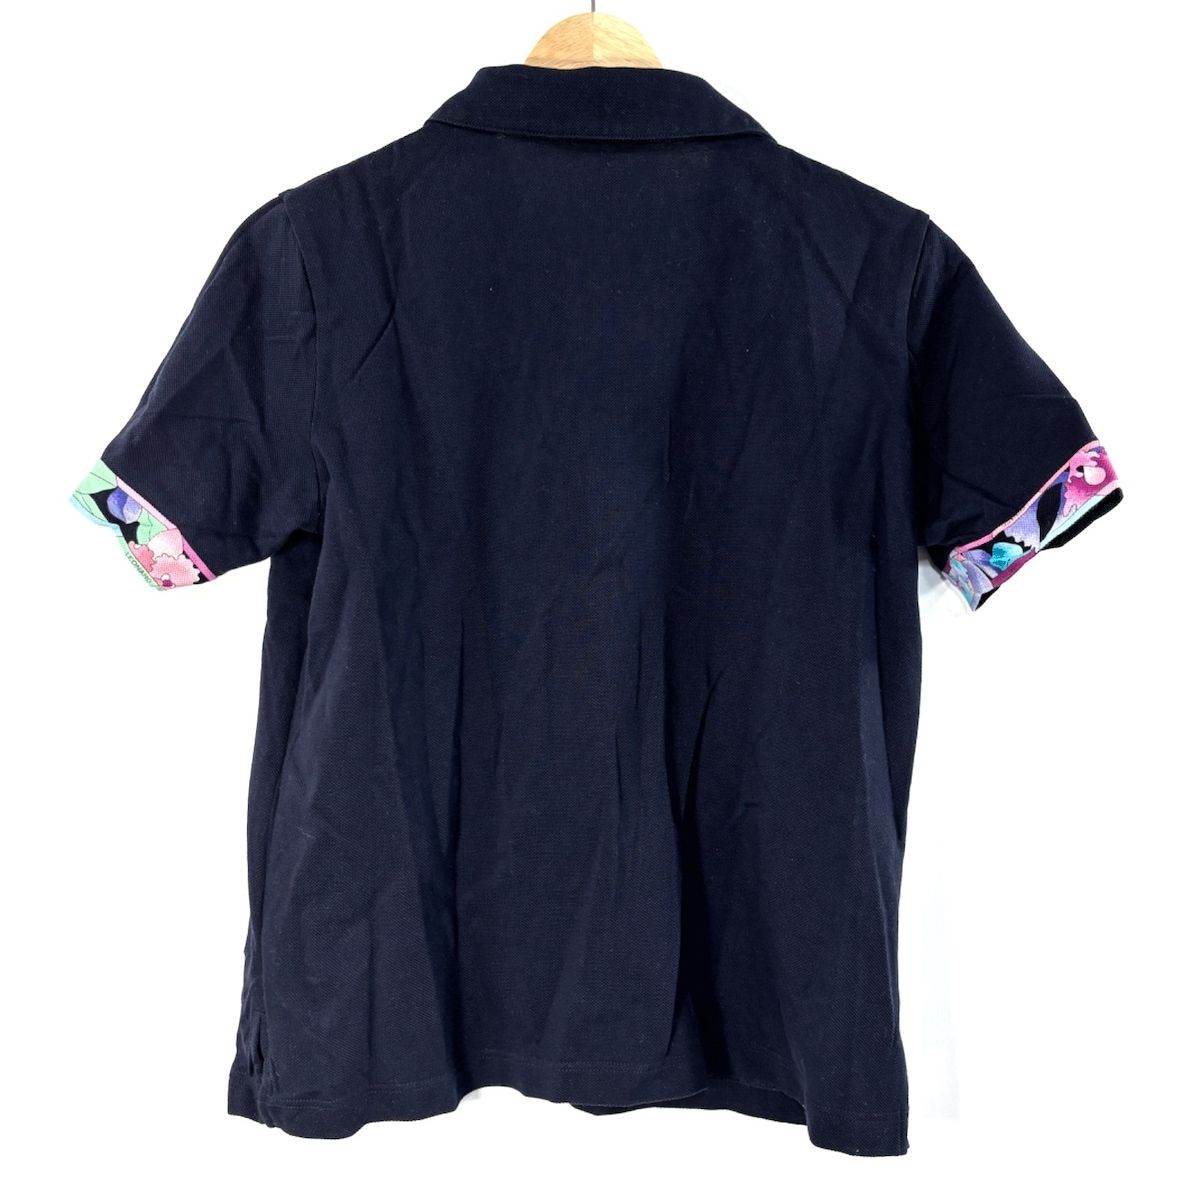 LEONARD SPORT(レオナールスポーツ) 半袖ポロシャツ サイズ42 L 